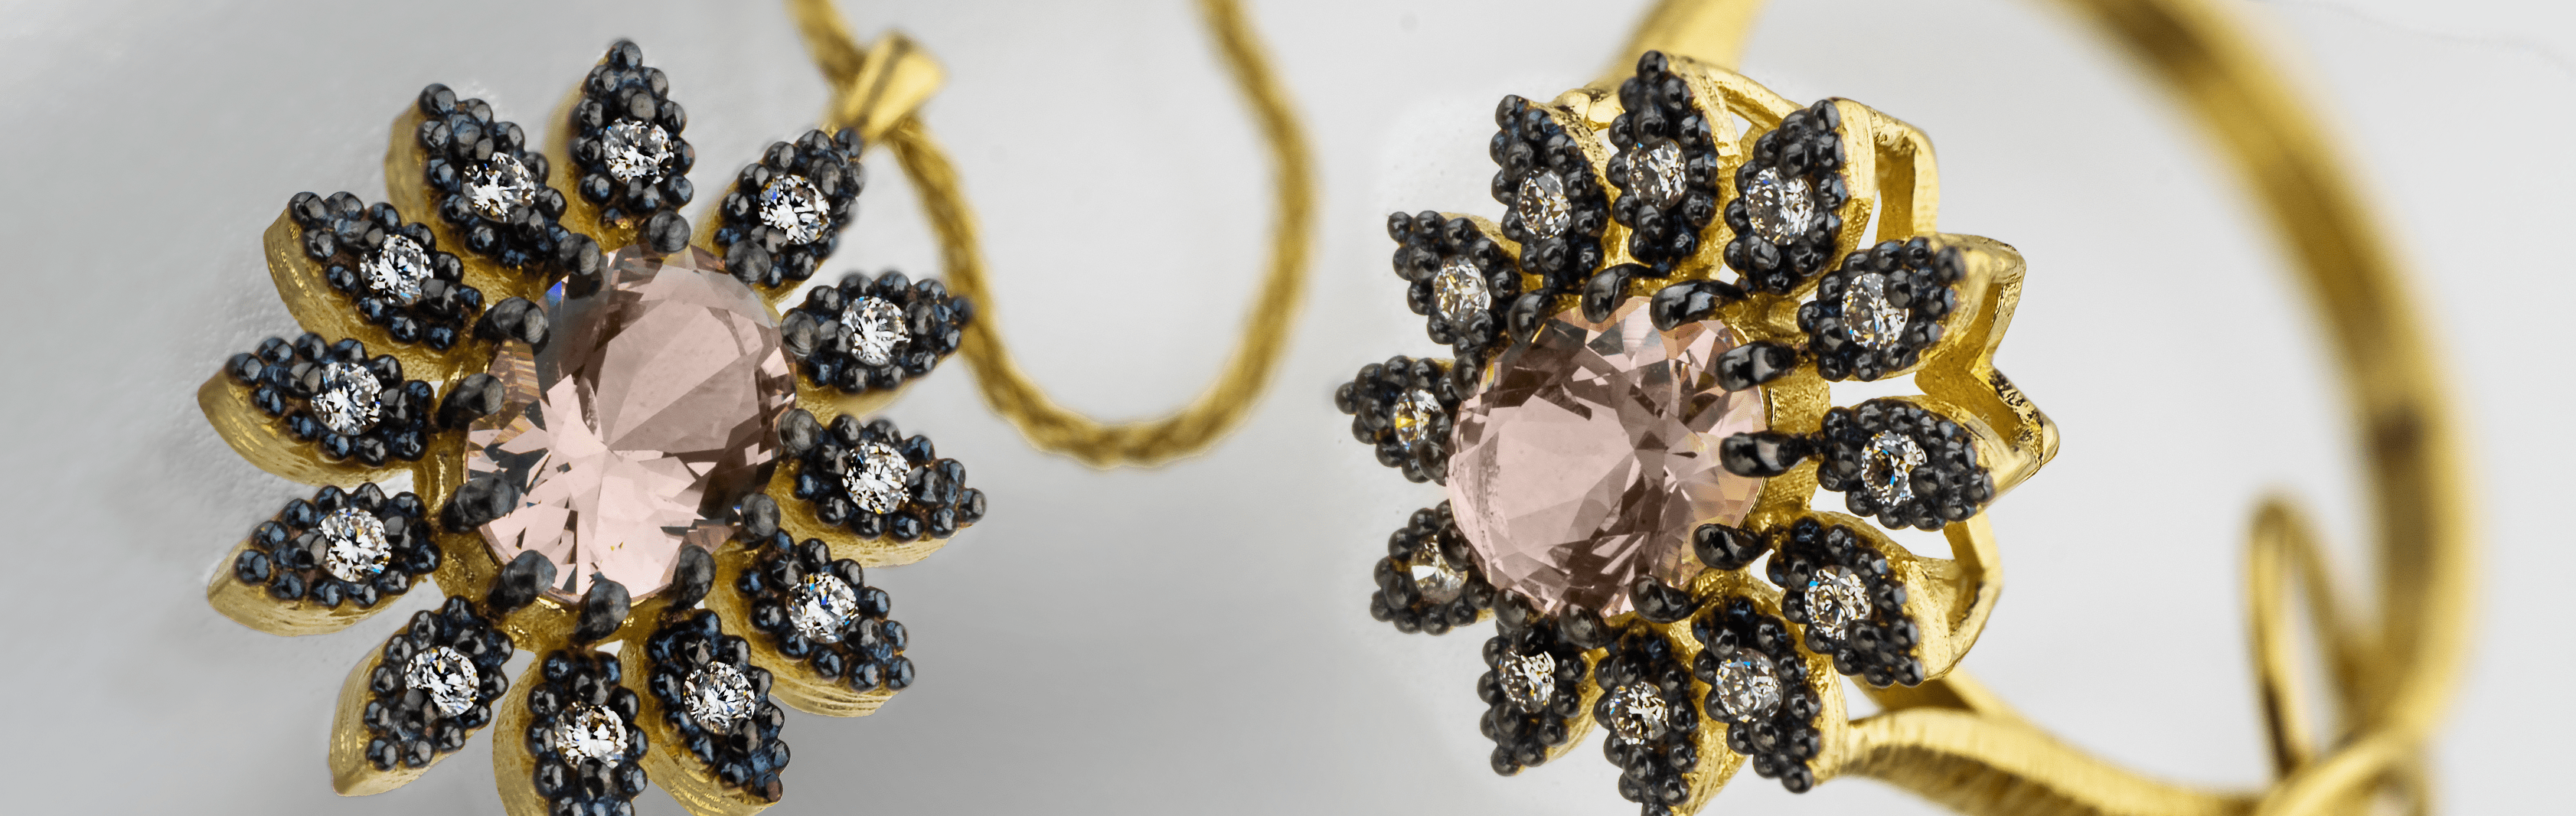 14k gold jewelry set with Morganite and Diamonds